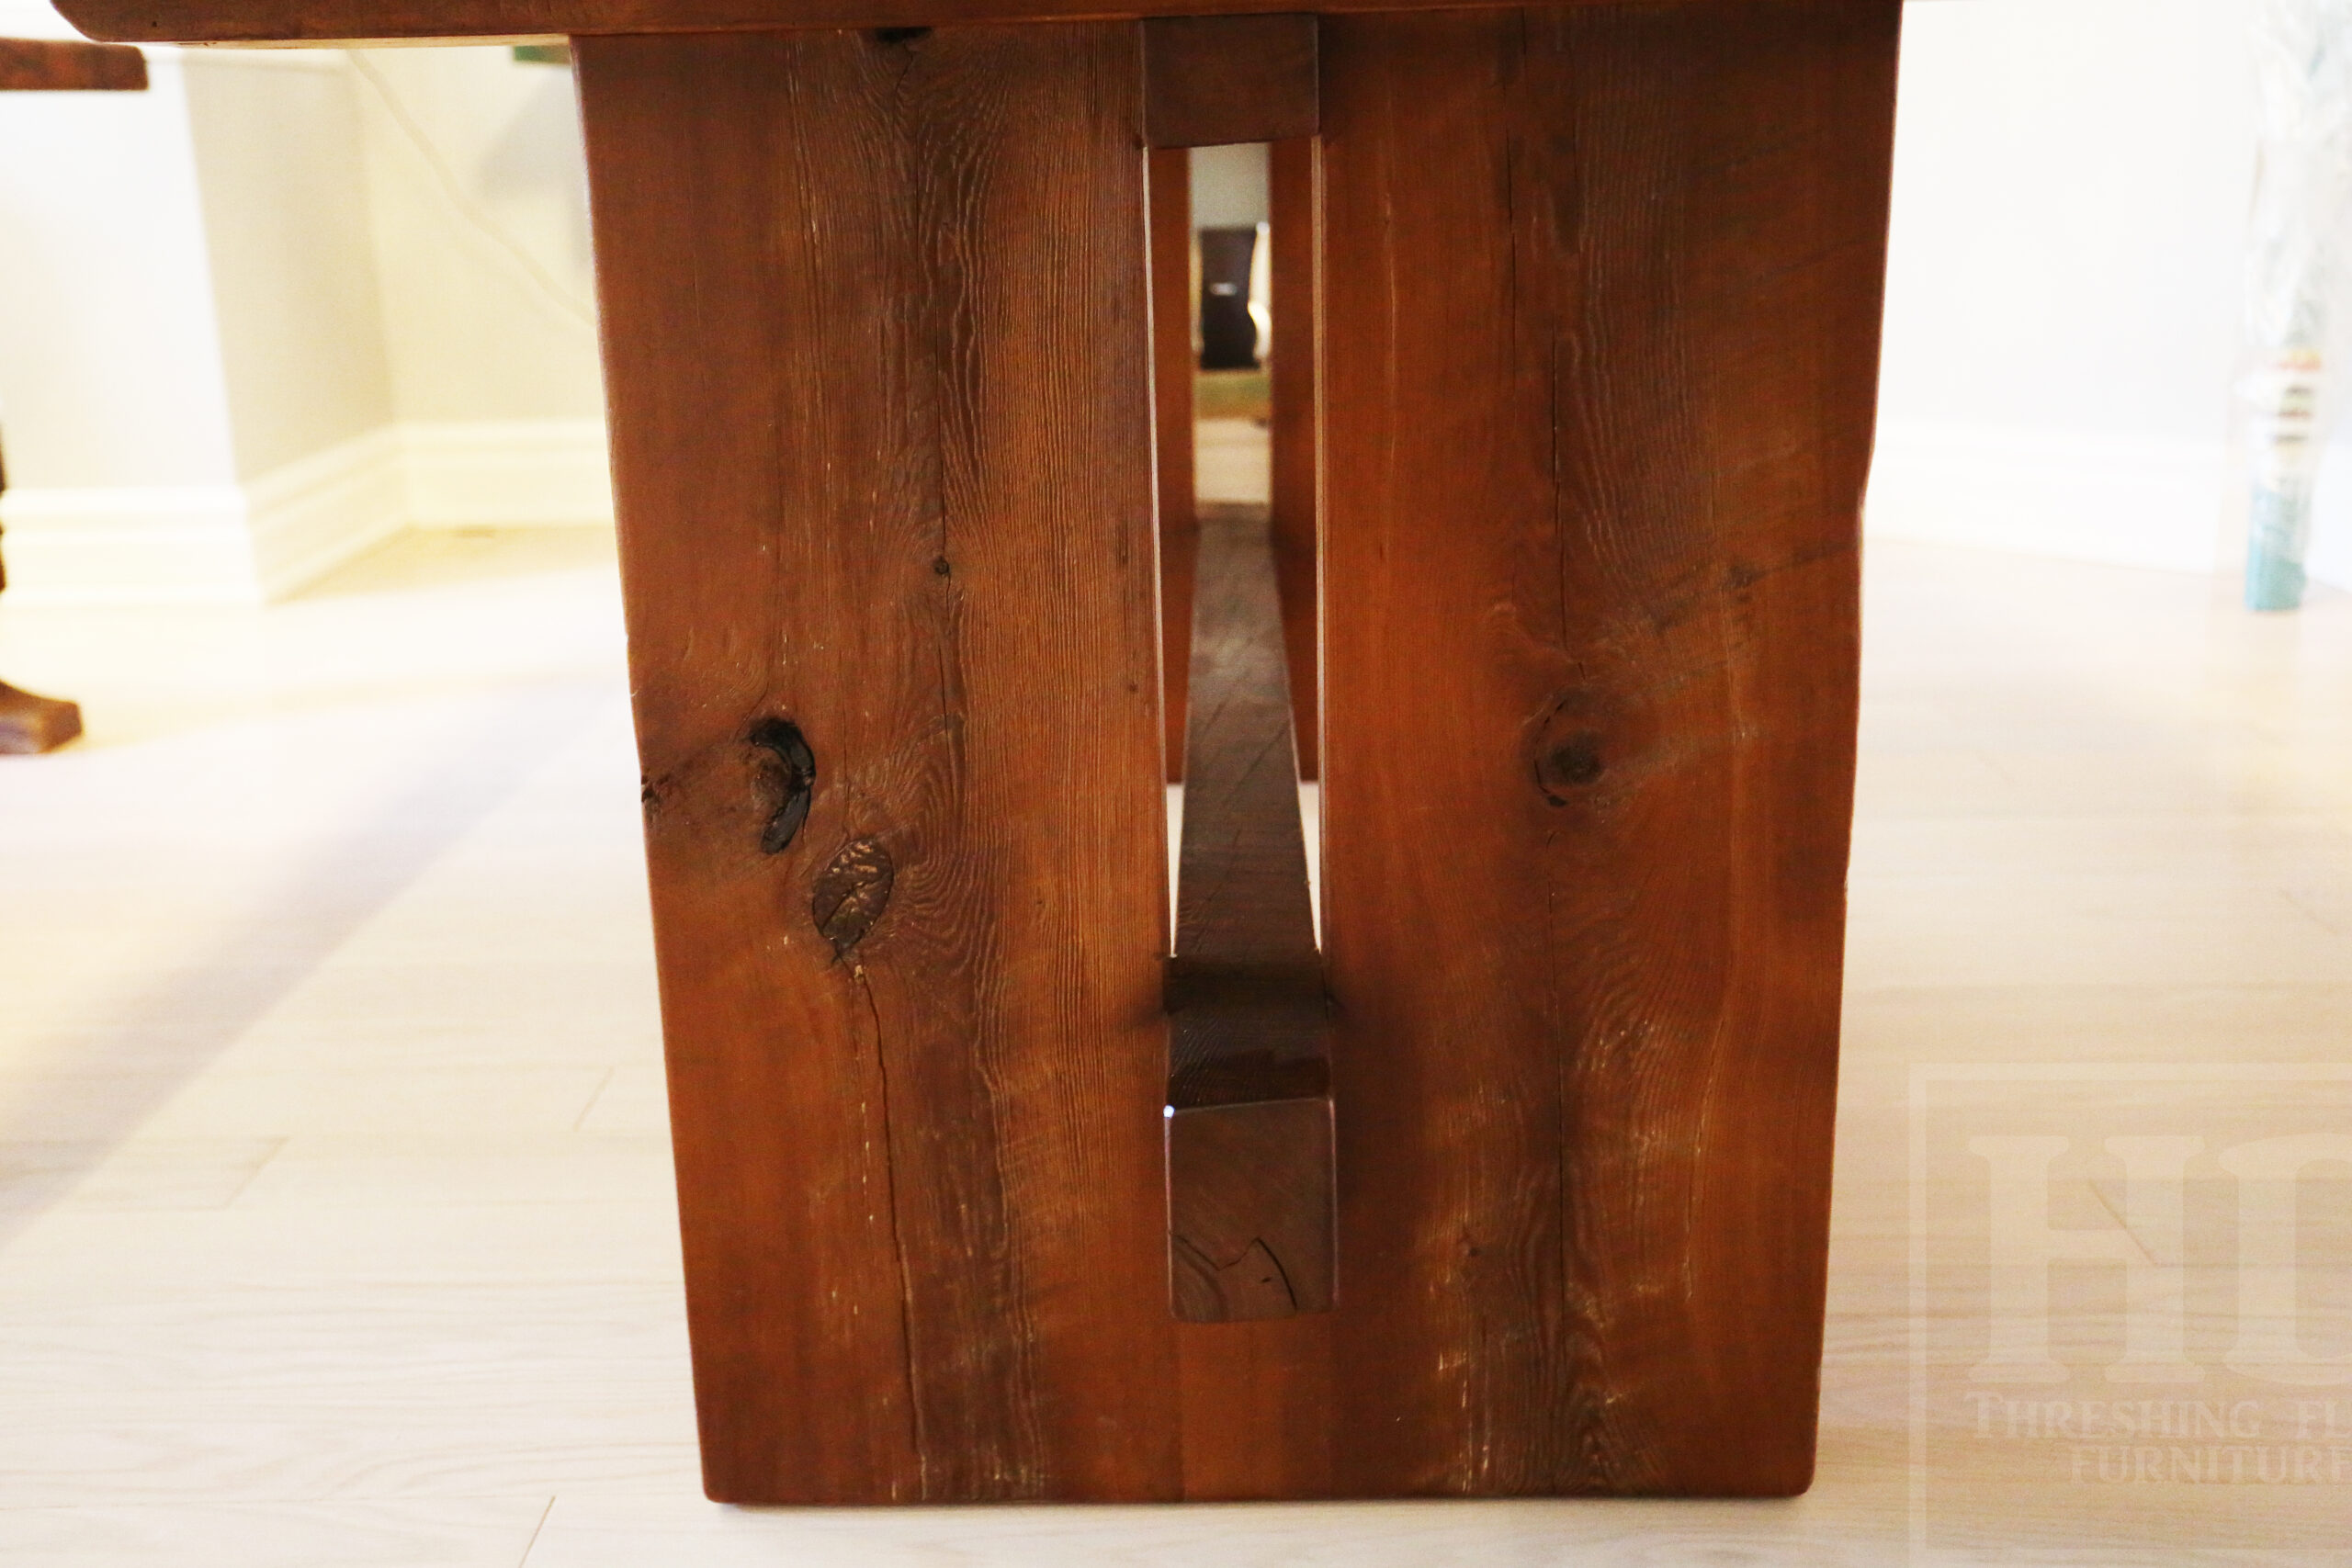 7' Reclaimed Wood Table made from Ontario barnwood for Toronto home - 42" wide - Modified Plank Base Option - Hemlock Threshing Floor Construction - Original edges & distressing maintained - Premium epoxy + satin polyurethane finish 